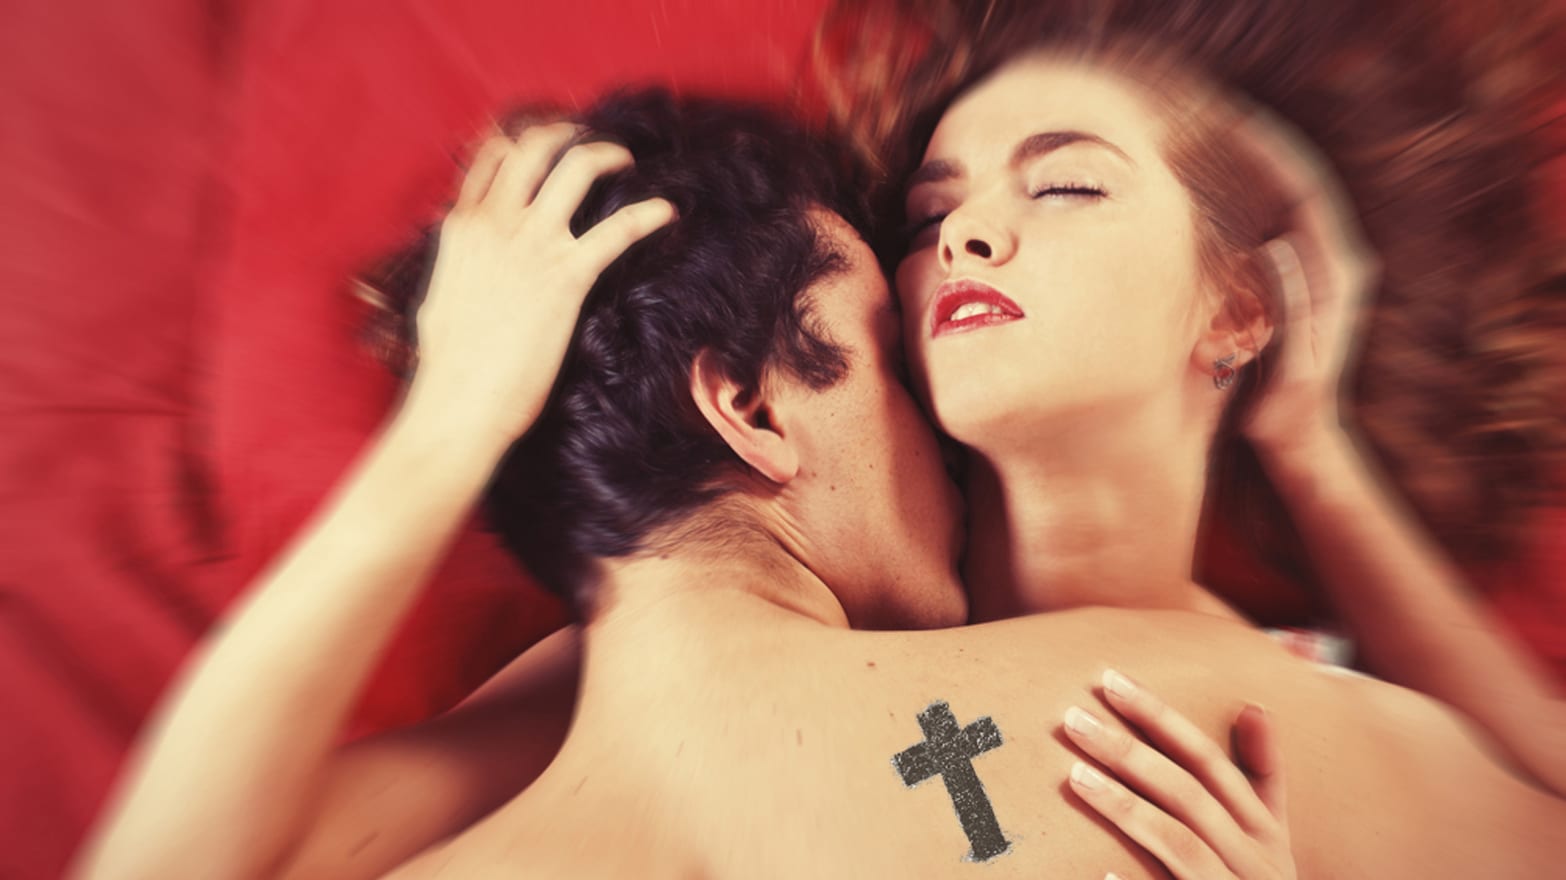 Jewish Porn Stars 2013 - I'm a Porn Star and I Believe in God